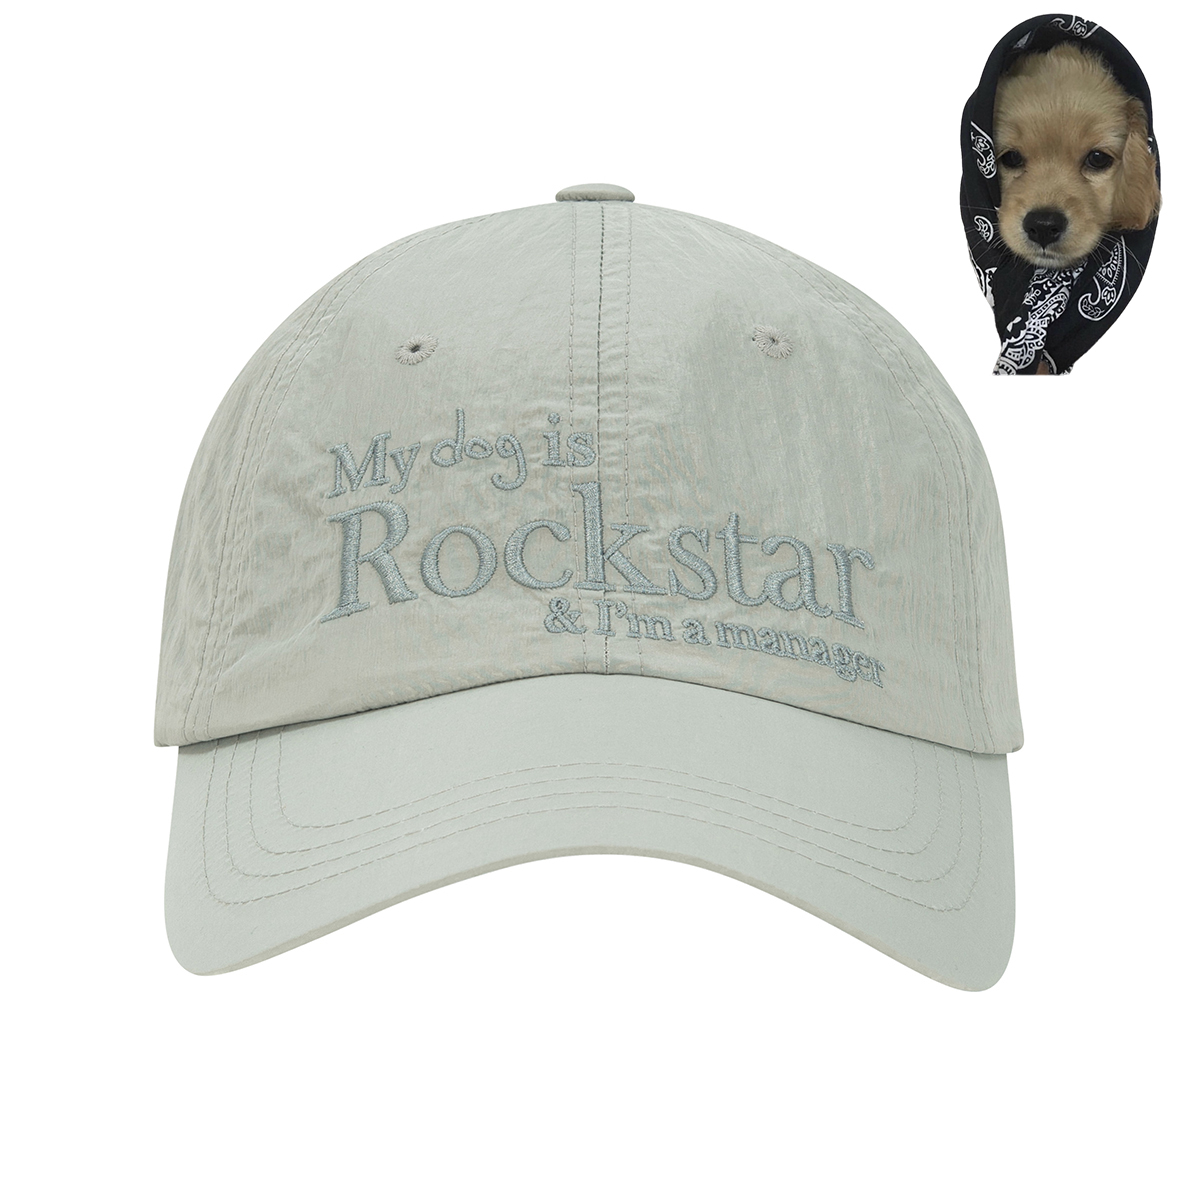 Rockstar dog Nylon cap (Light grey)